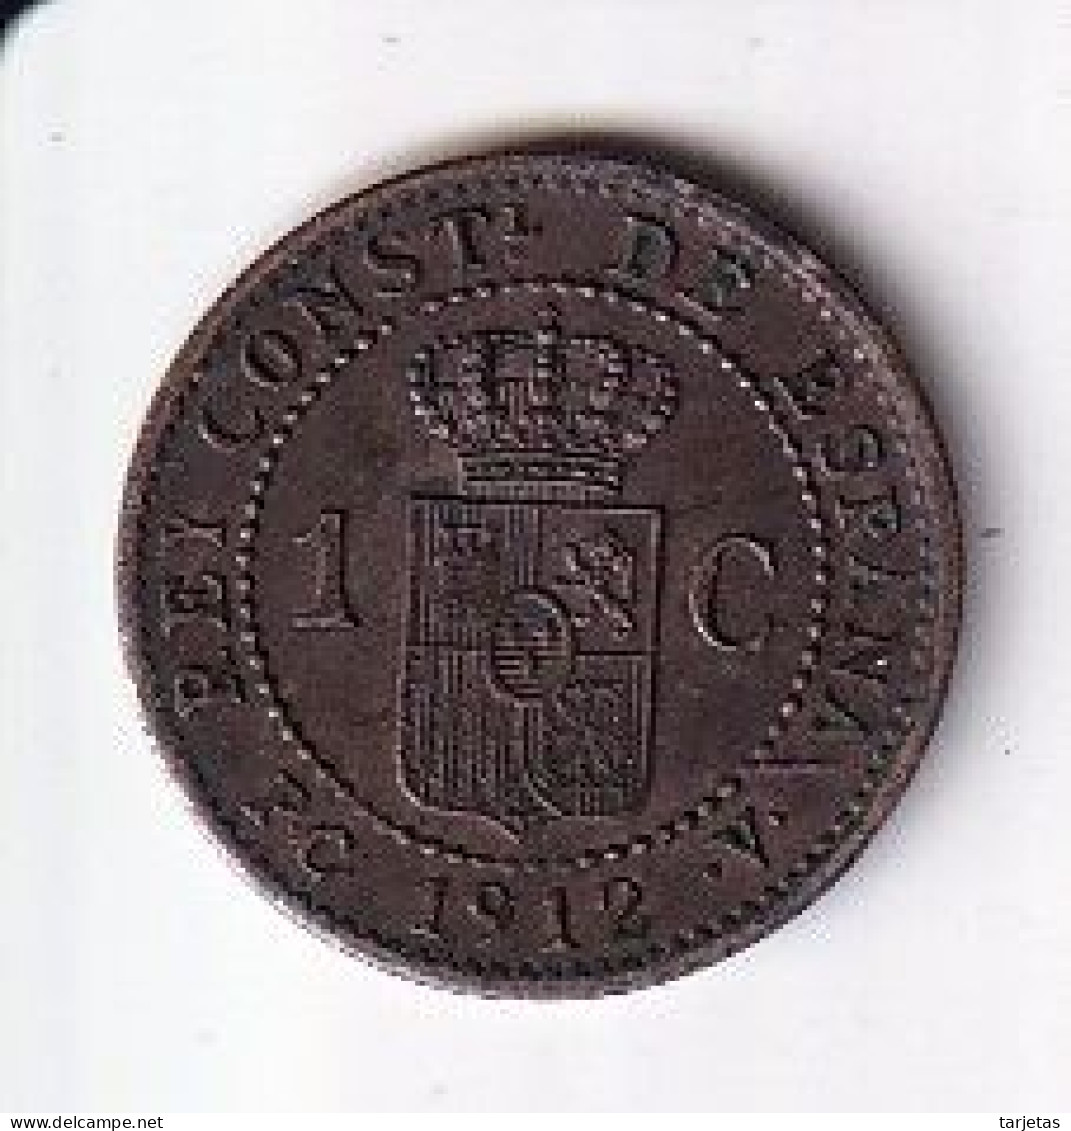 MONEDA DE ESPAÑA DE 1 CENTIMO DEL AÑO 1912 PCV (COIN) ALFONSO XIII - First Minting